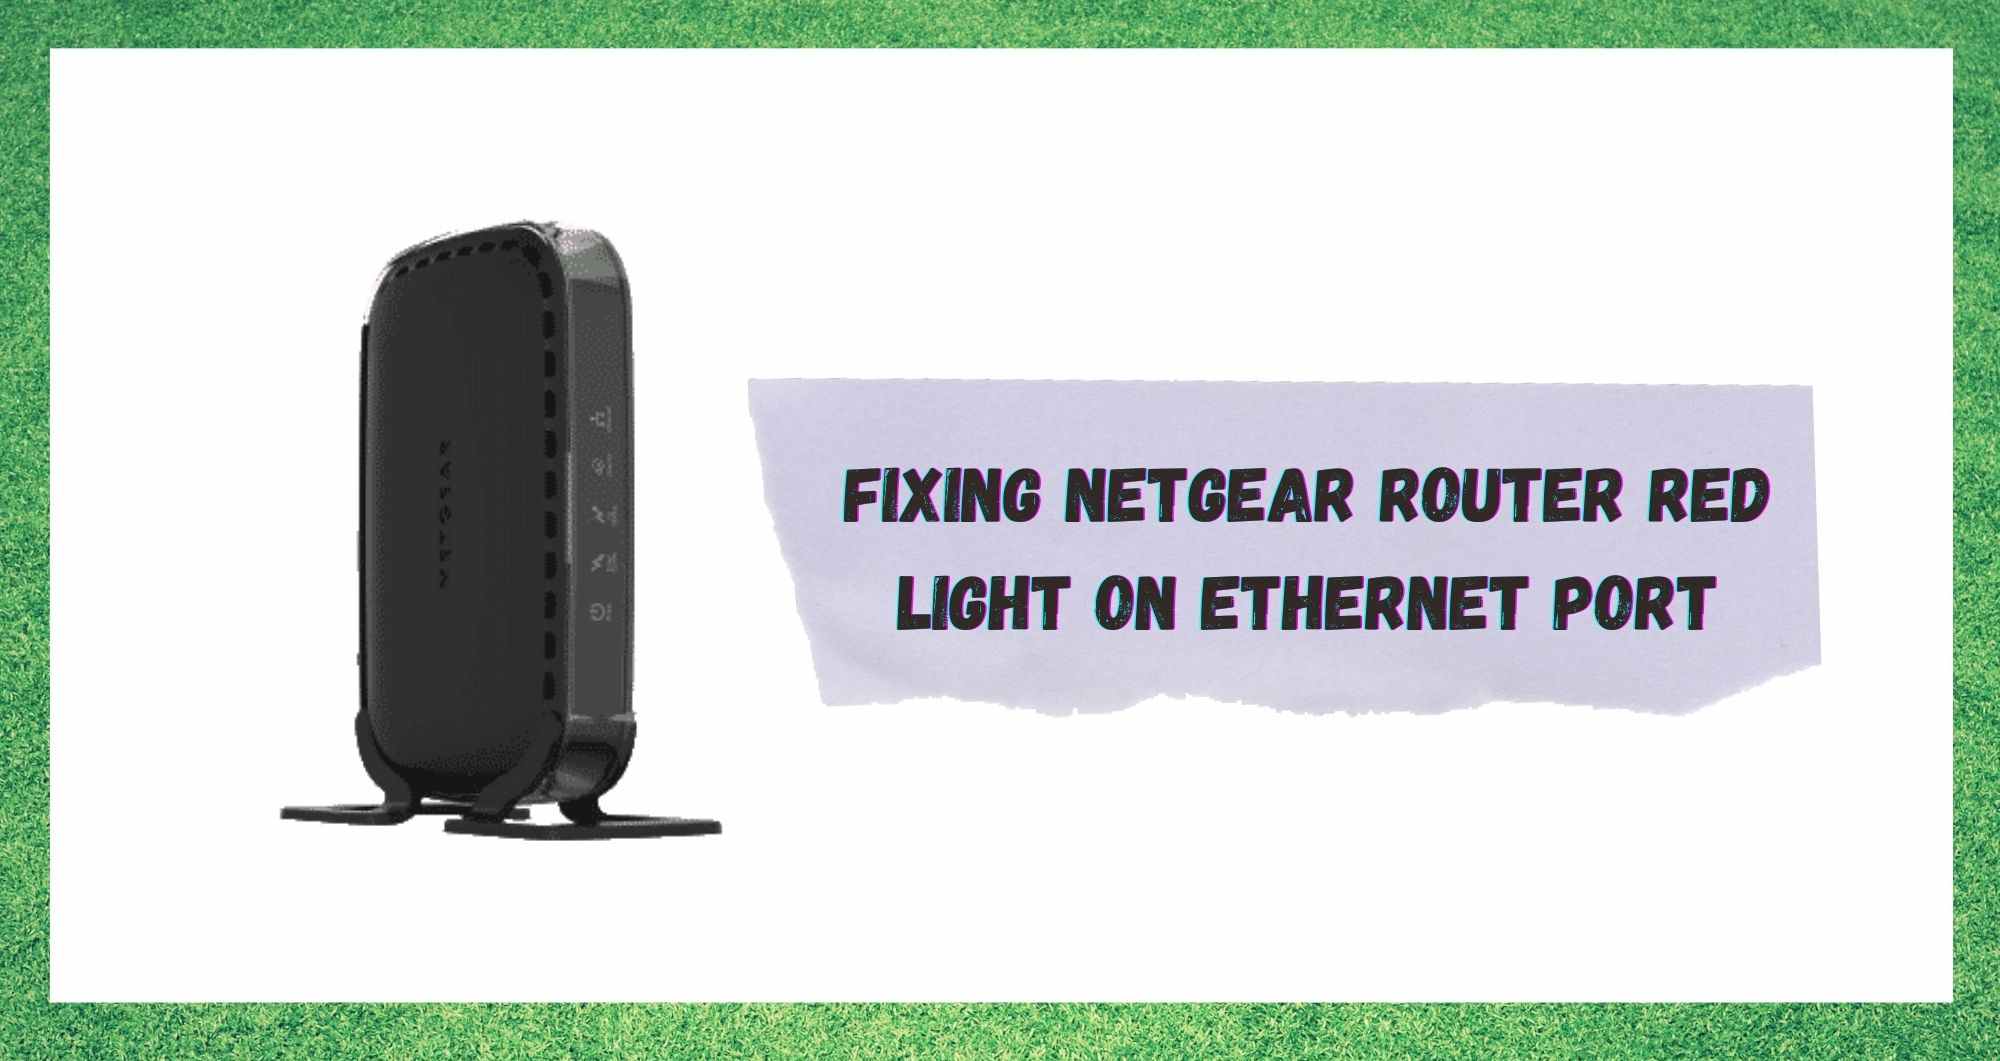 Ethernet Port တွင် Netgear Router မှ မီးနီပြခြင်း- ပြင်ဆင်ရန် နည်းလမ်း 4 ခု